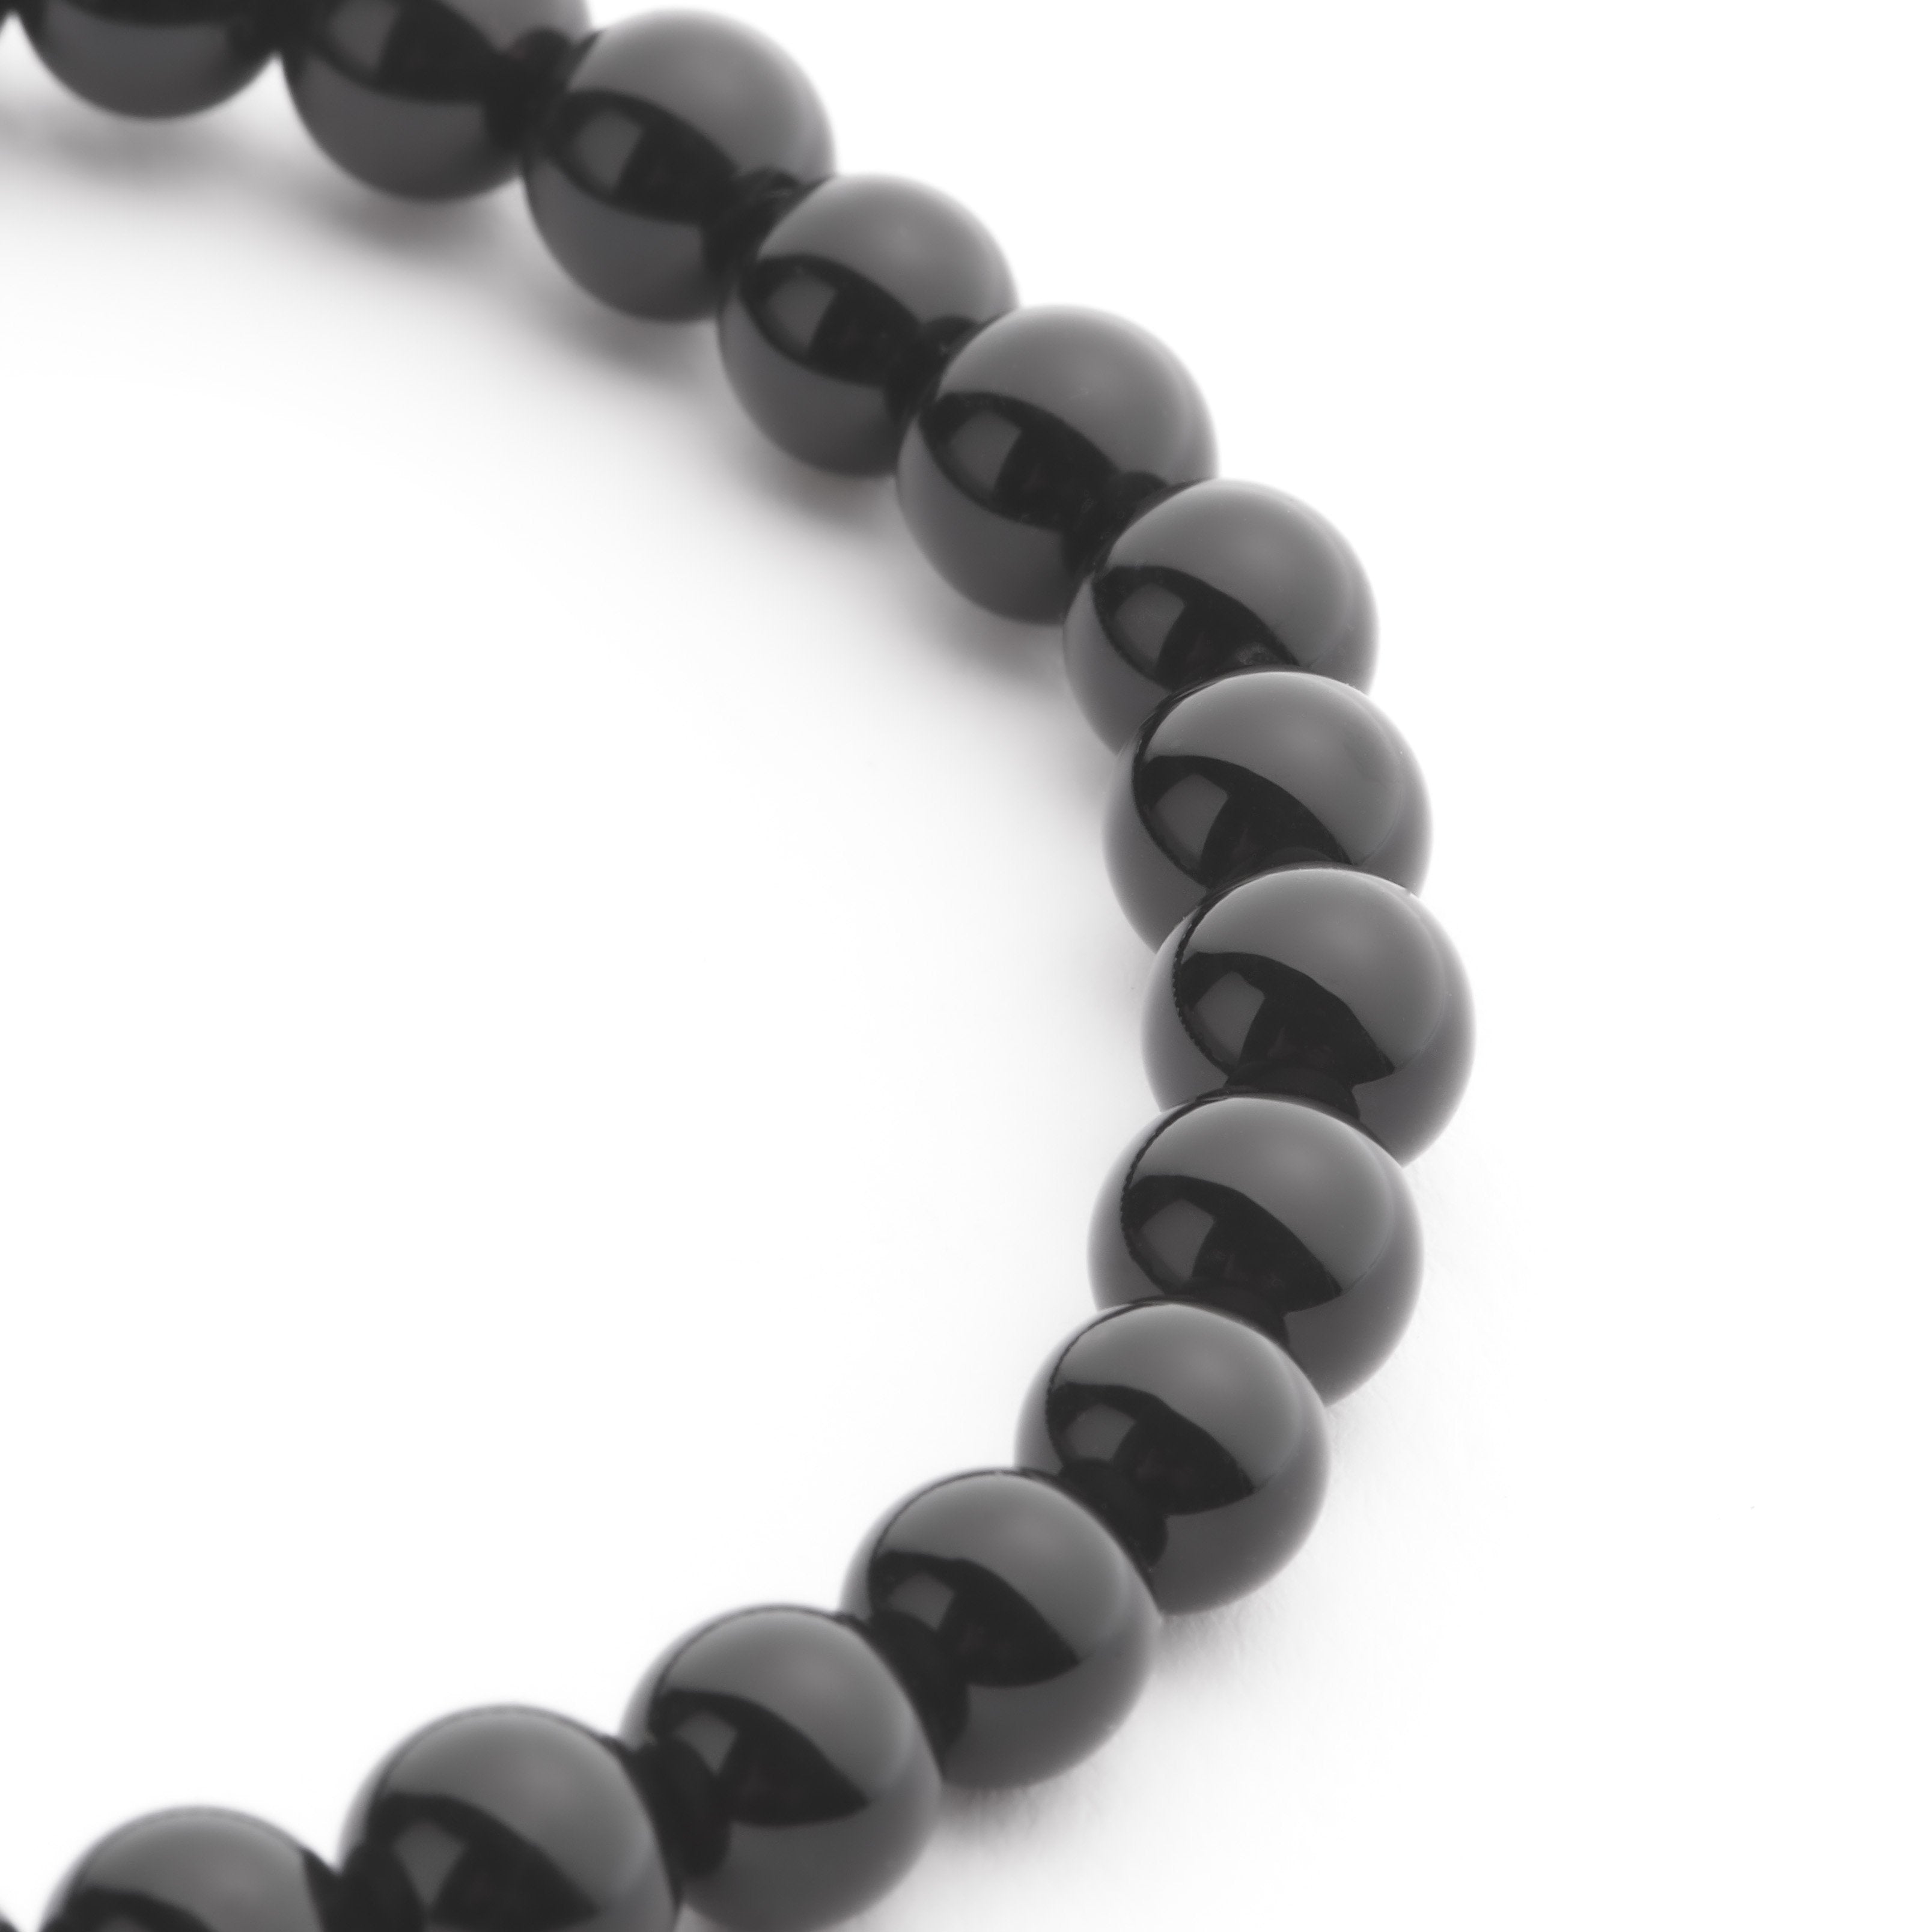 Black Onyx Semi-Precious Stone Bracelet